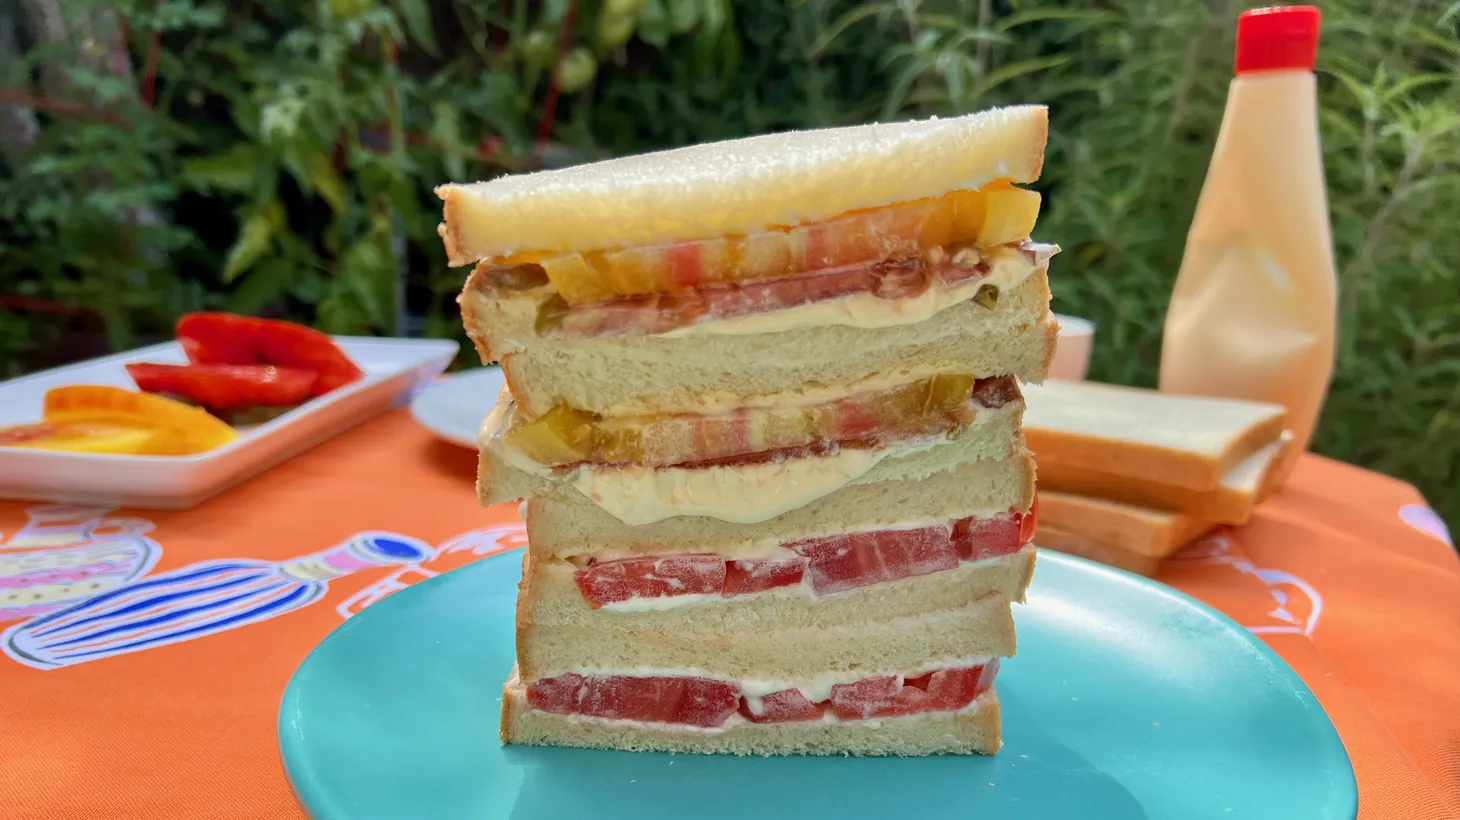 Tomato sandwiches are the greatest seasonal treat of summer.